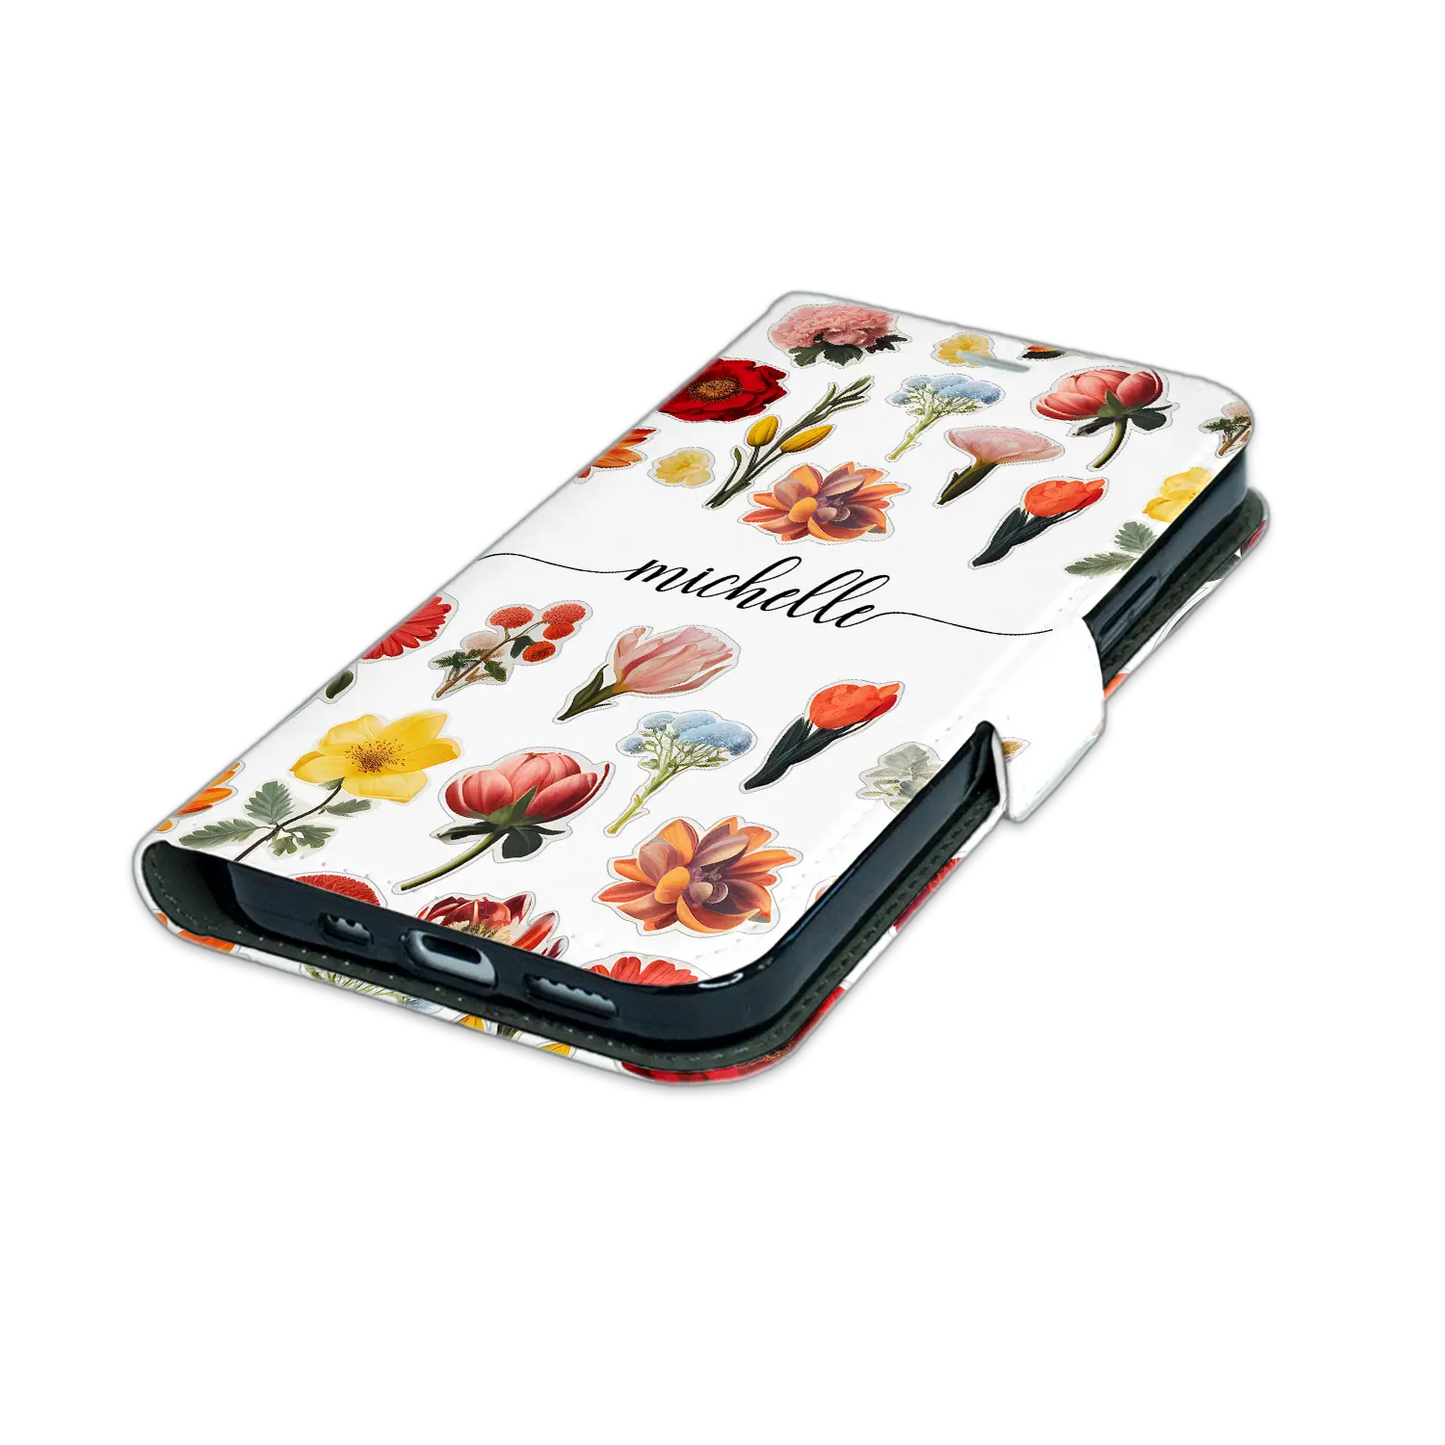 Flower Stickers - Custom iPhone Case